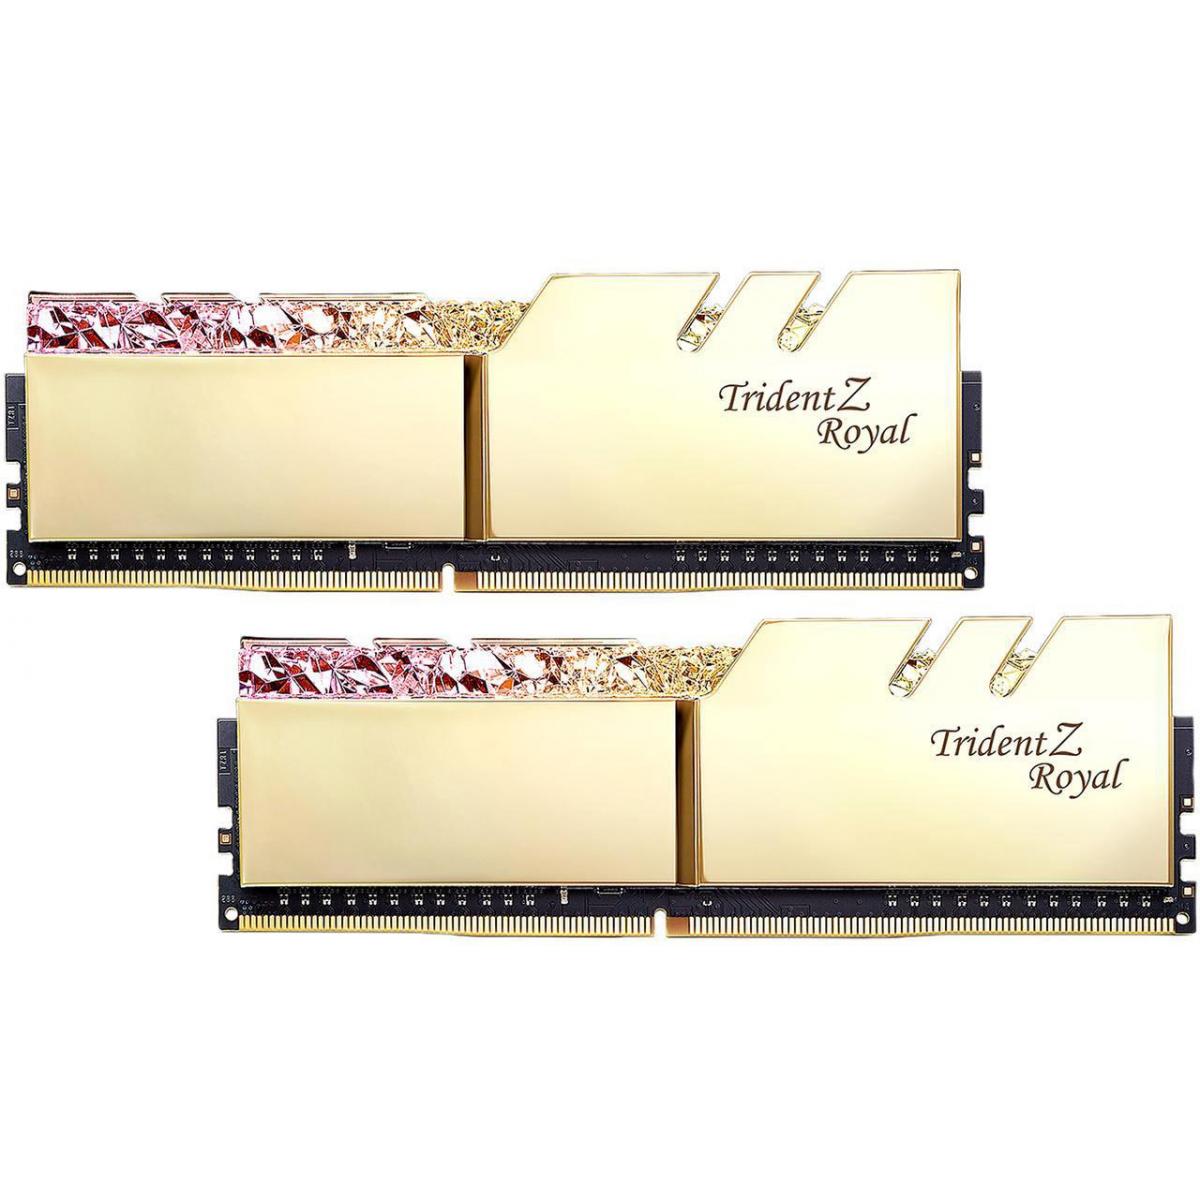 G.SKILL Trident Z Royal Series 16GB (2 x 8GB) DDR4 3000